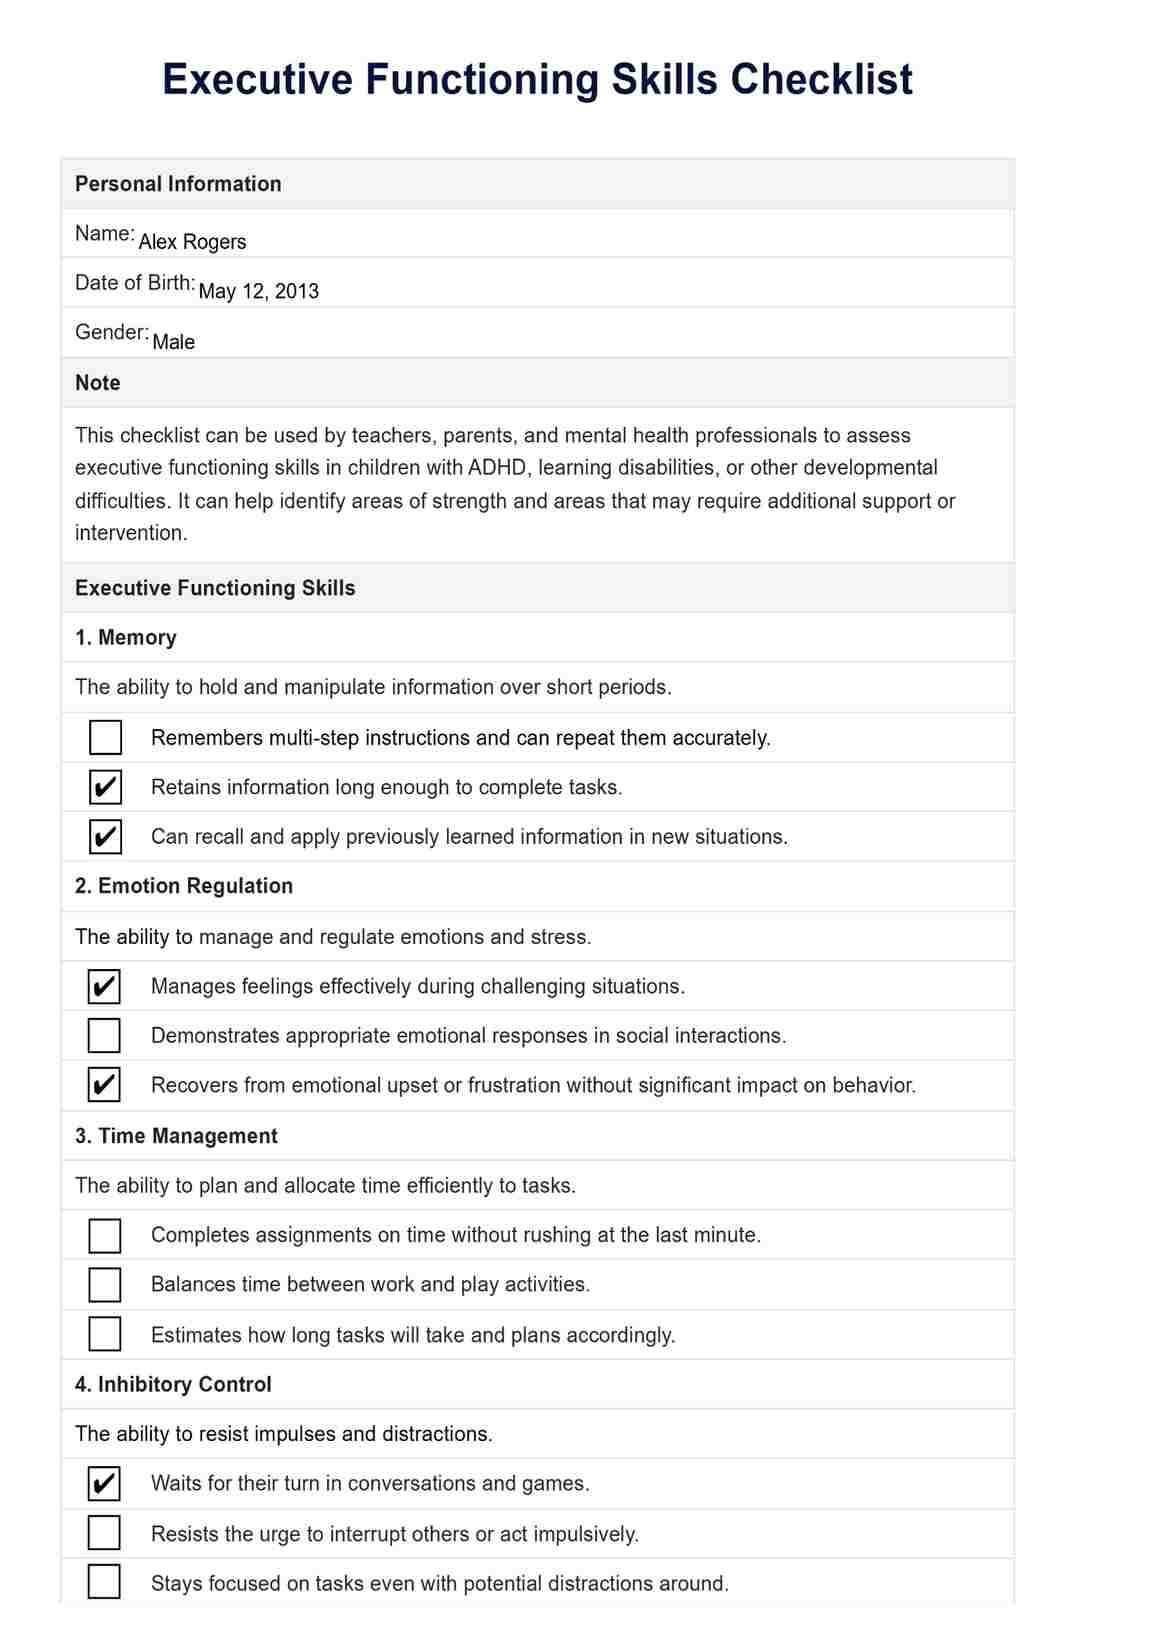 Executive Functioning Skills Checklist PDF Example